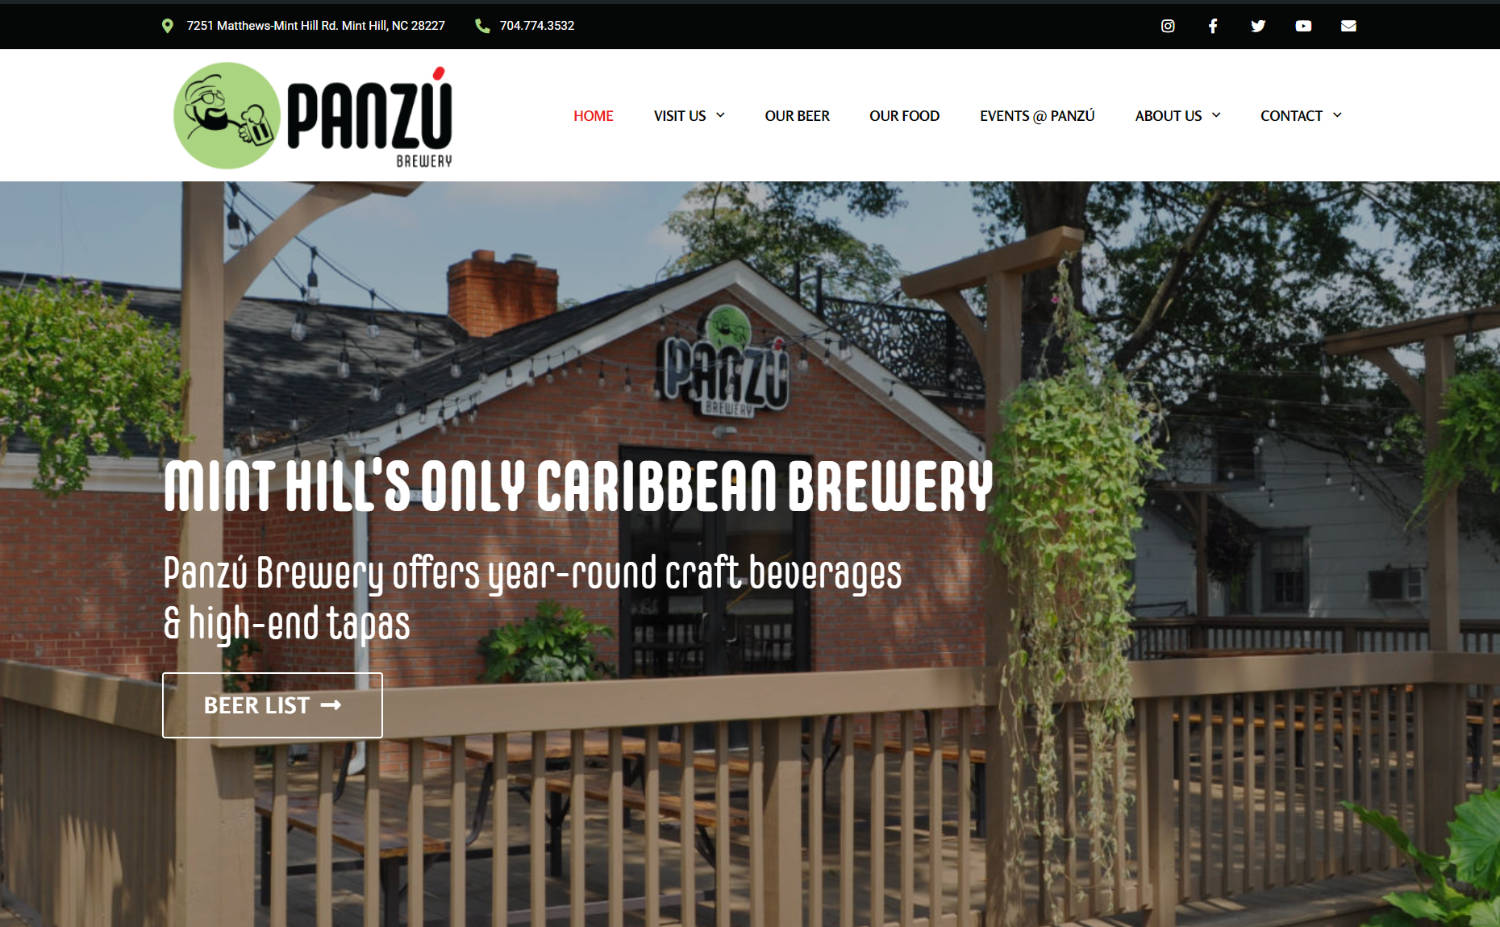 Panzu Brewery Minth Hill NC